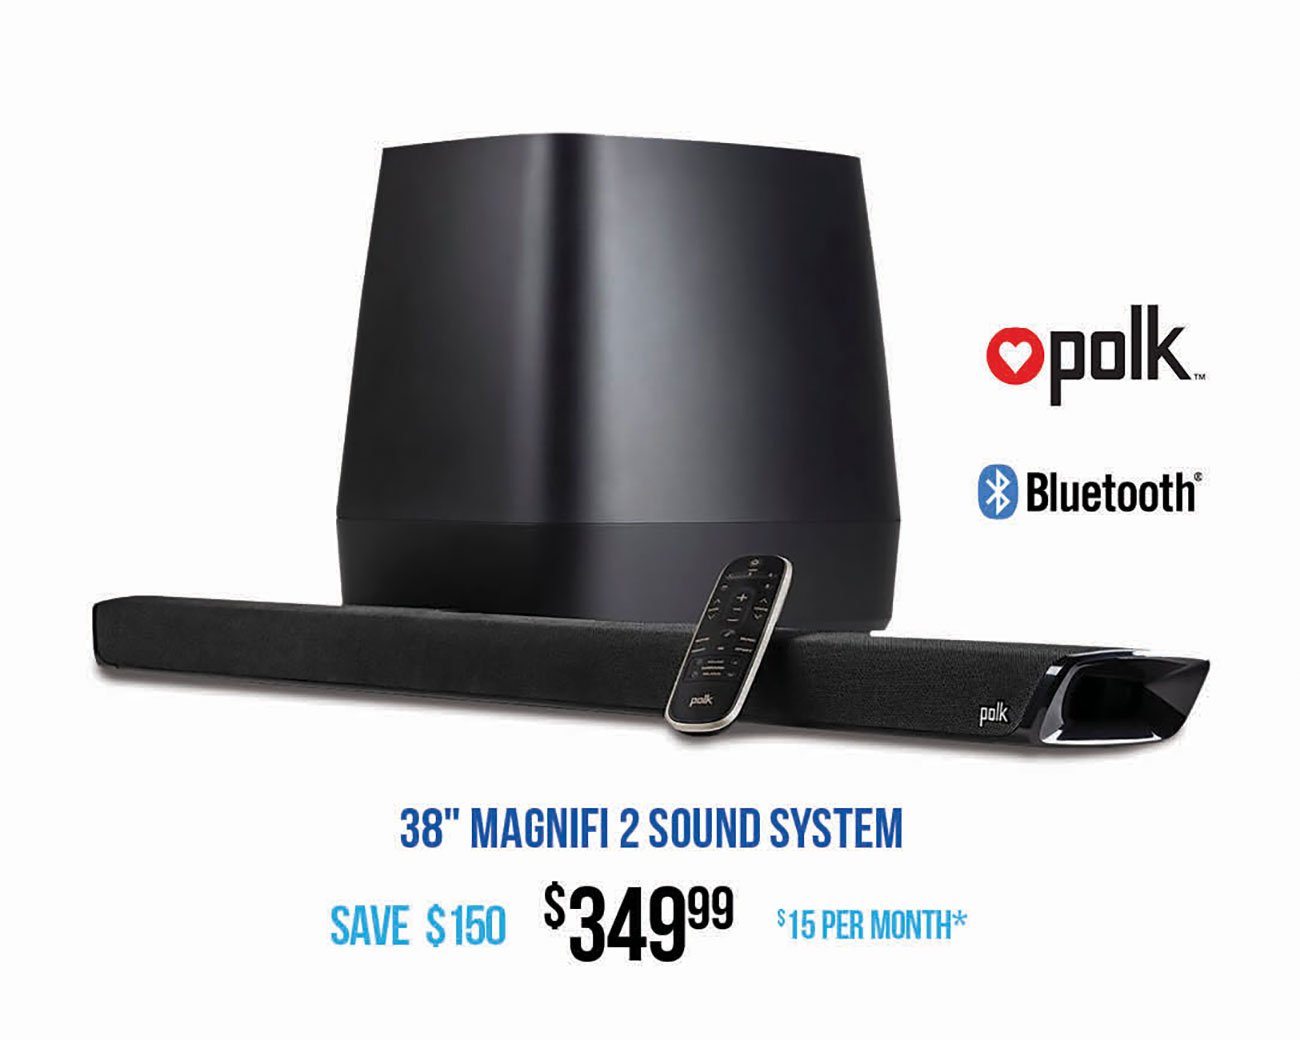 Polk-Magnifi-2-Sound-System